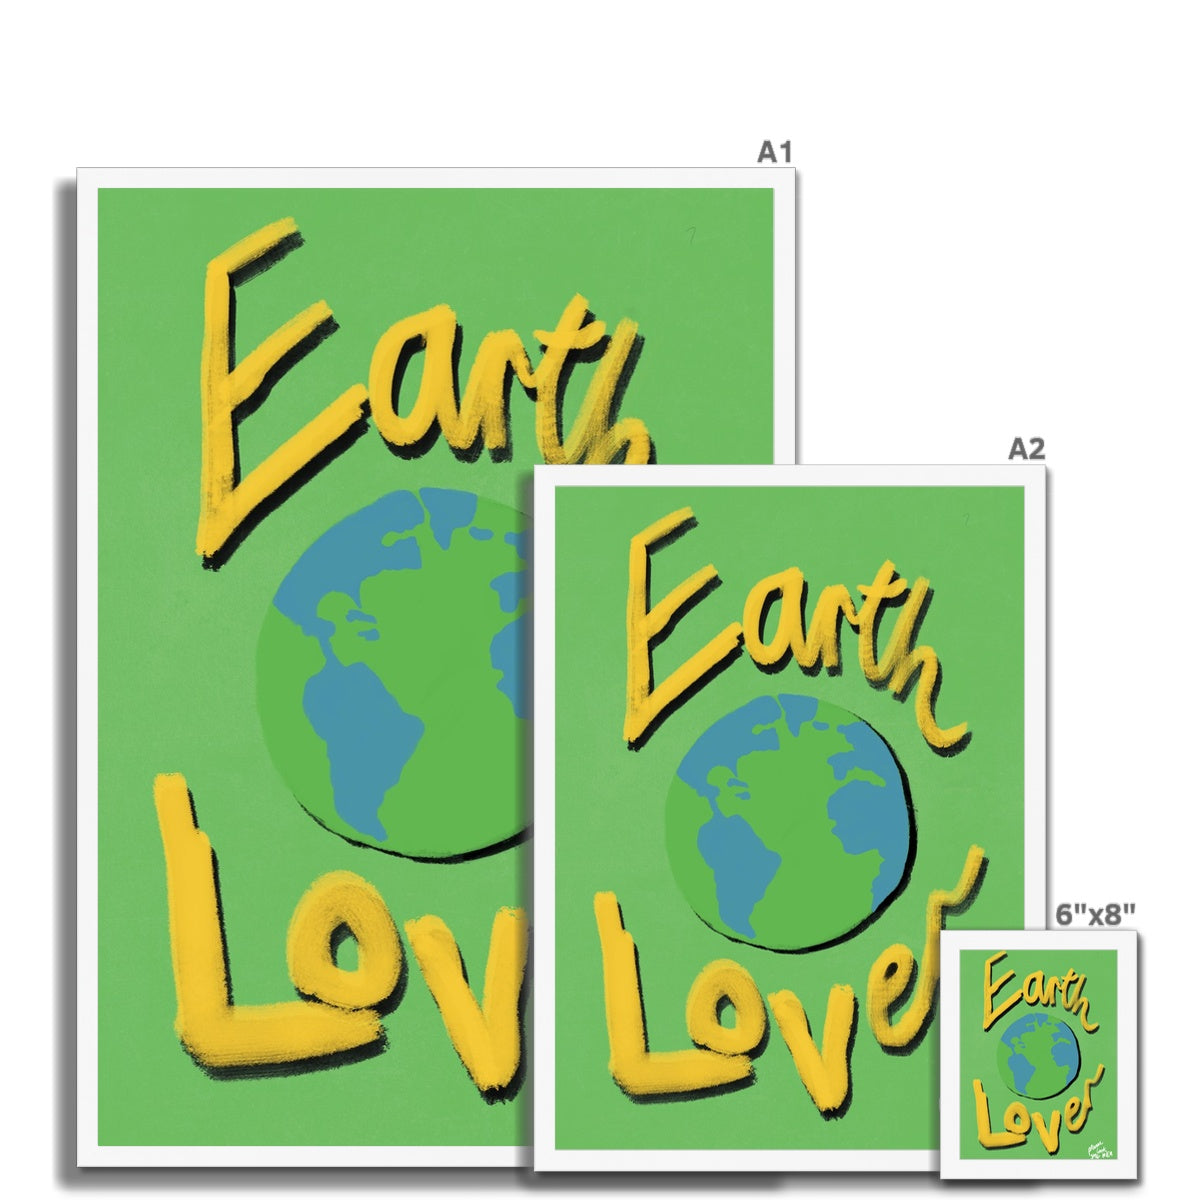 Earth Lover Print - Green, Yellow Framed Print